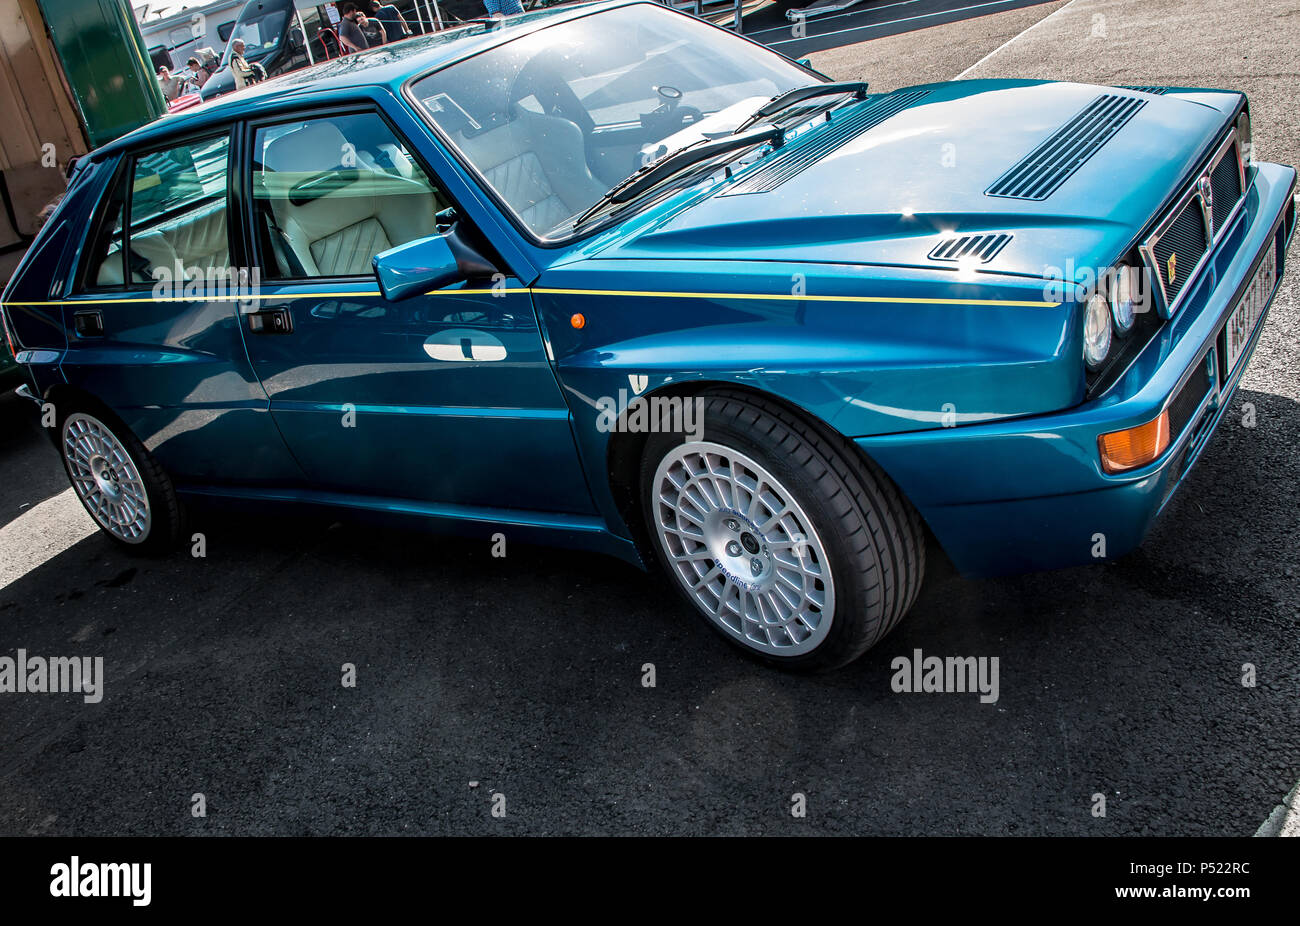 A blue retro Lancia Delta sports car Stock Photo